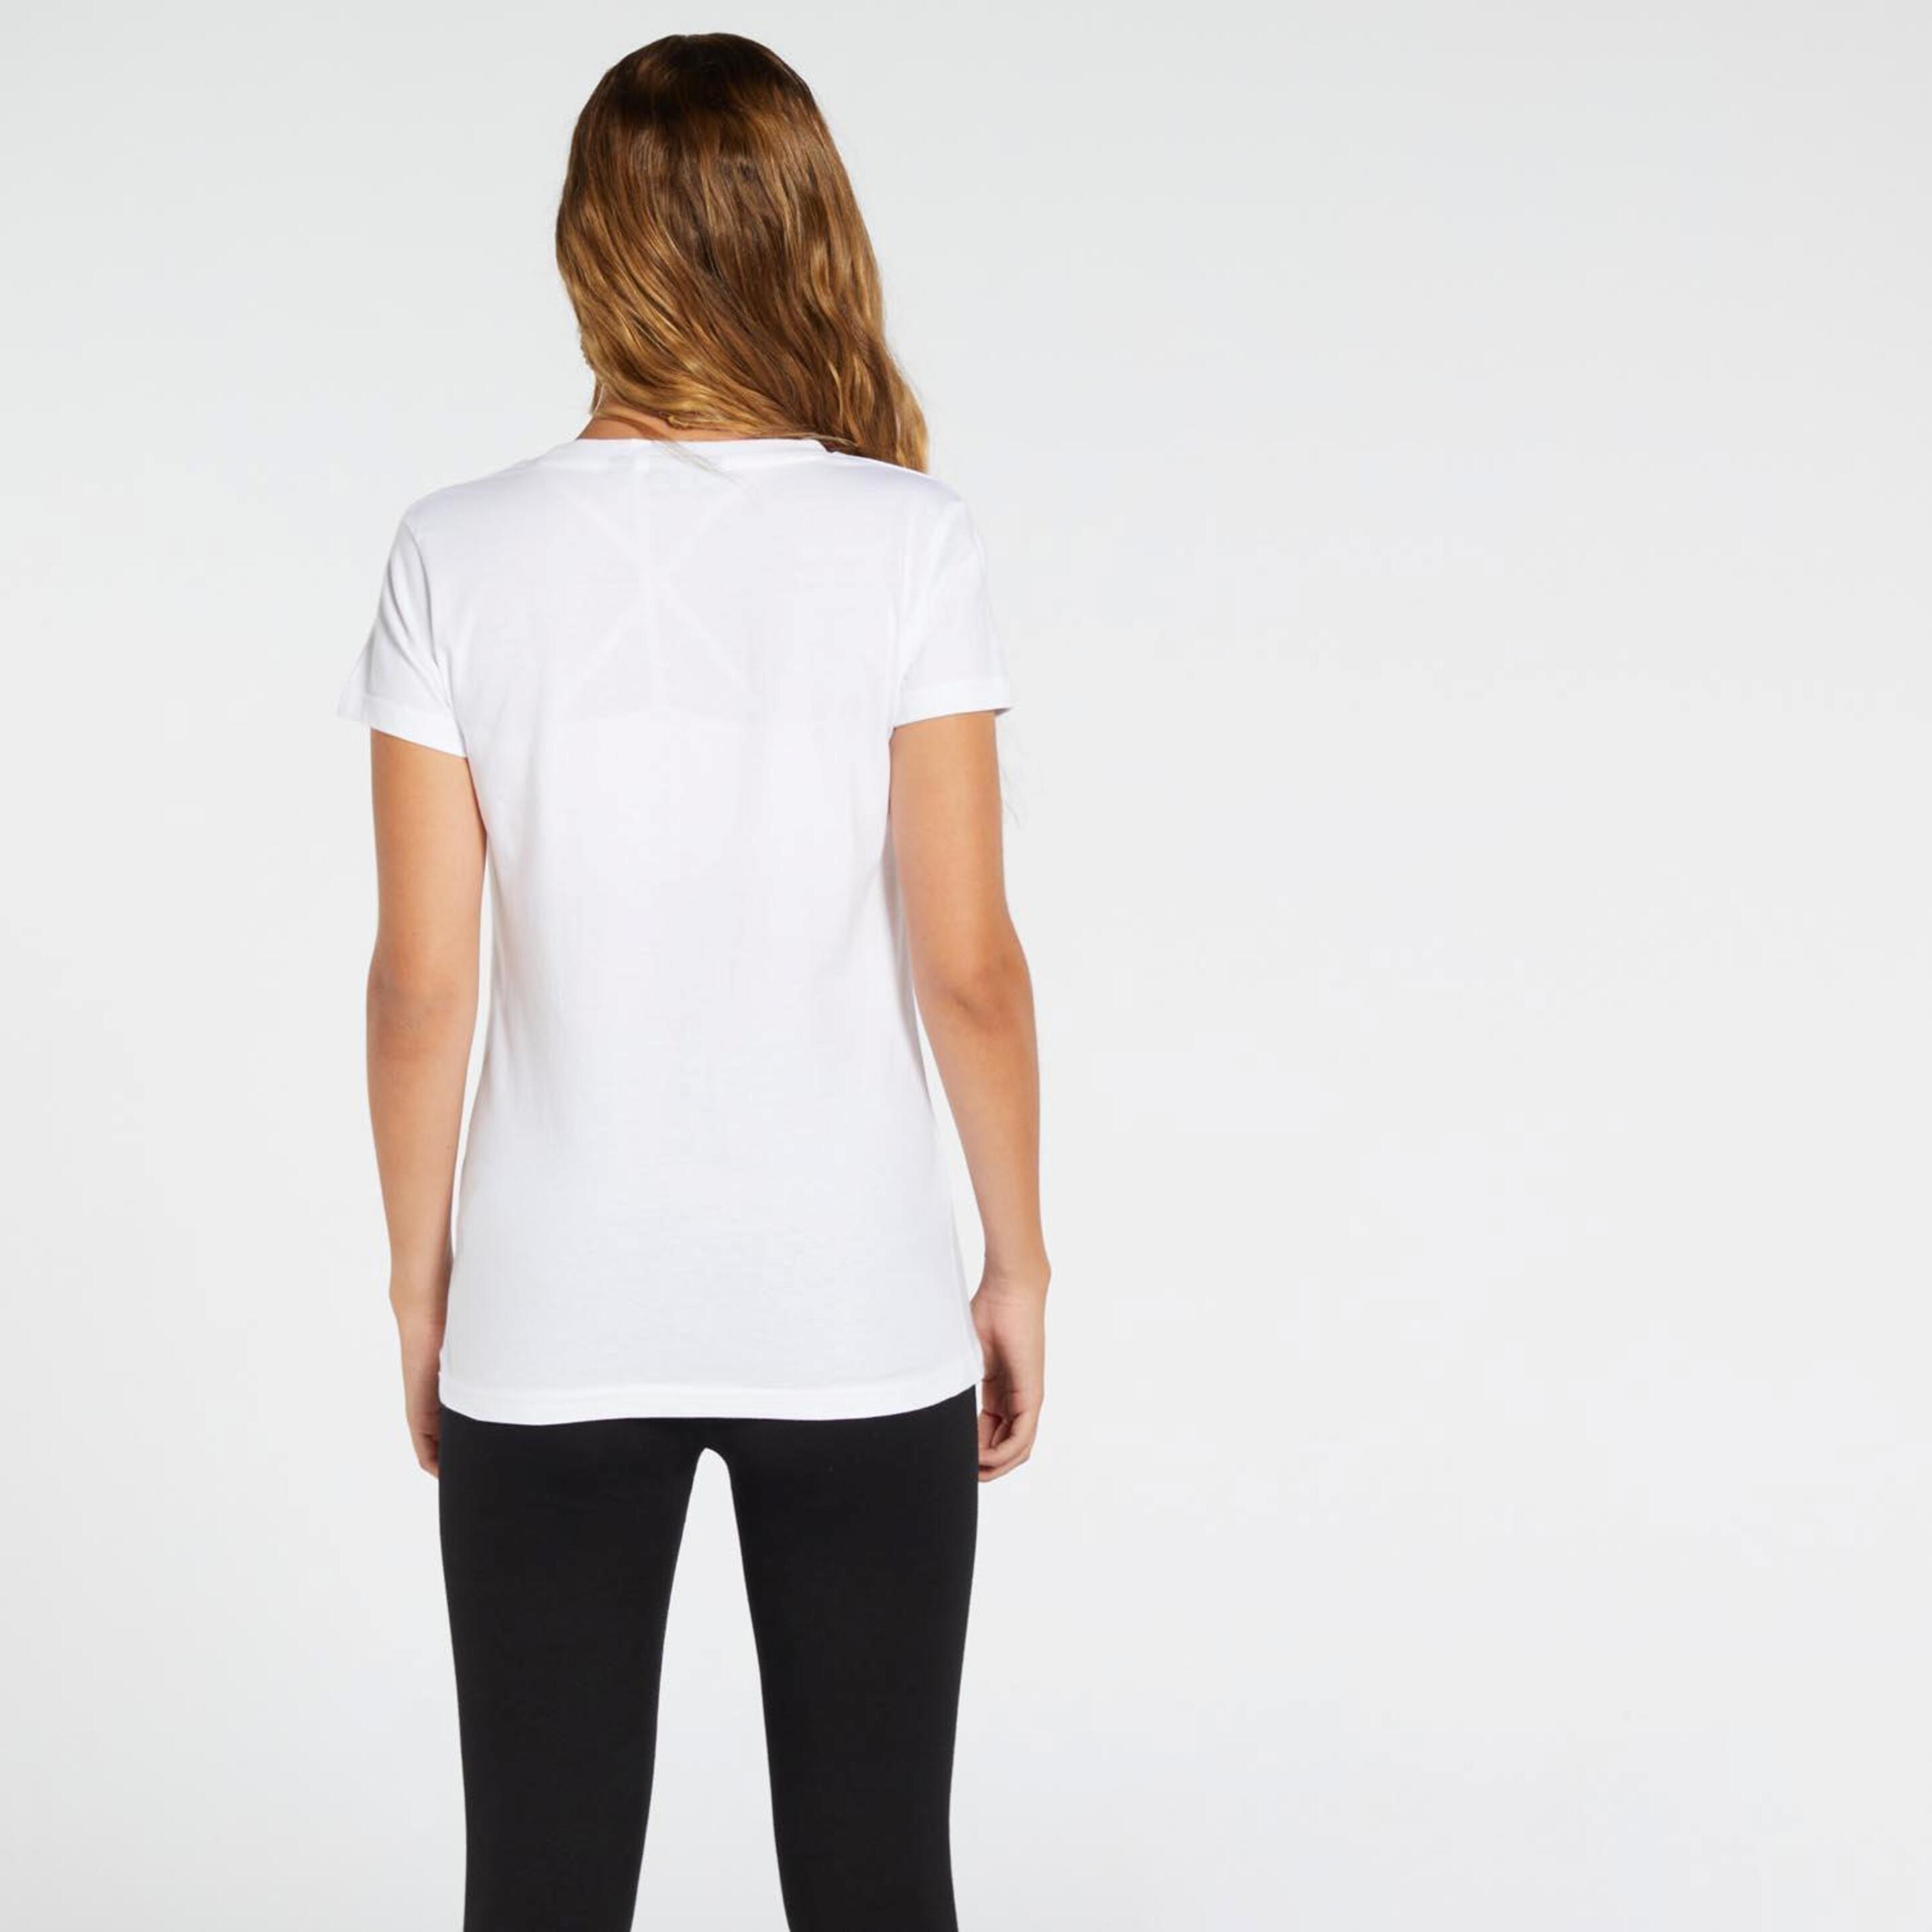 Fila Cecilia - Blanco - Camiseta Mujer